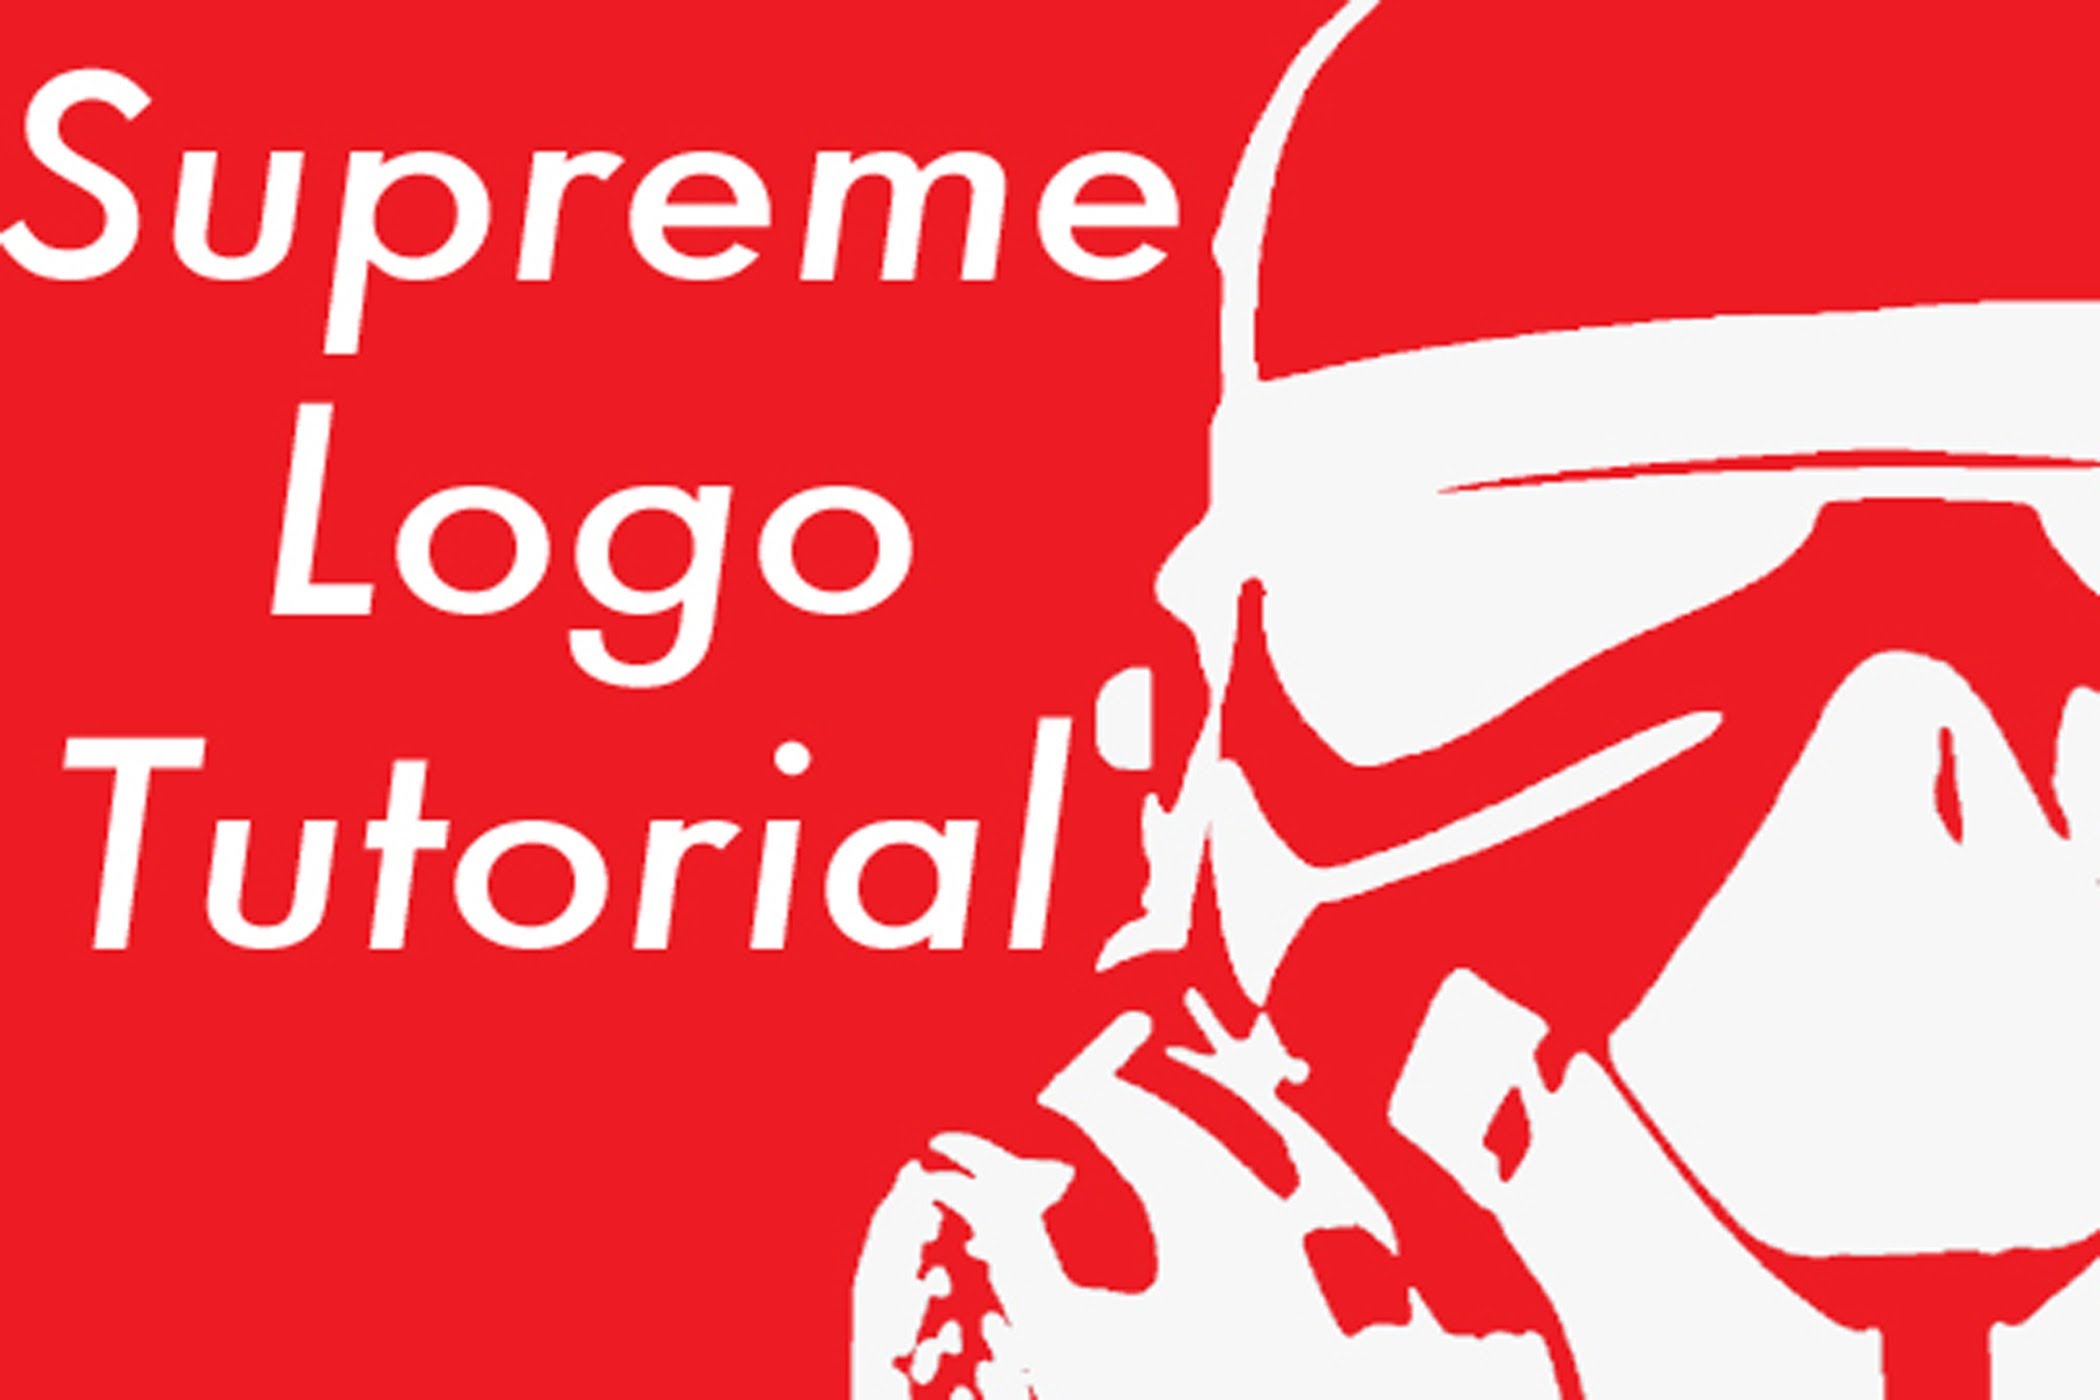 Supreme Box Logo Vector at Vectorified.com | Collection of Supreme Box